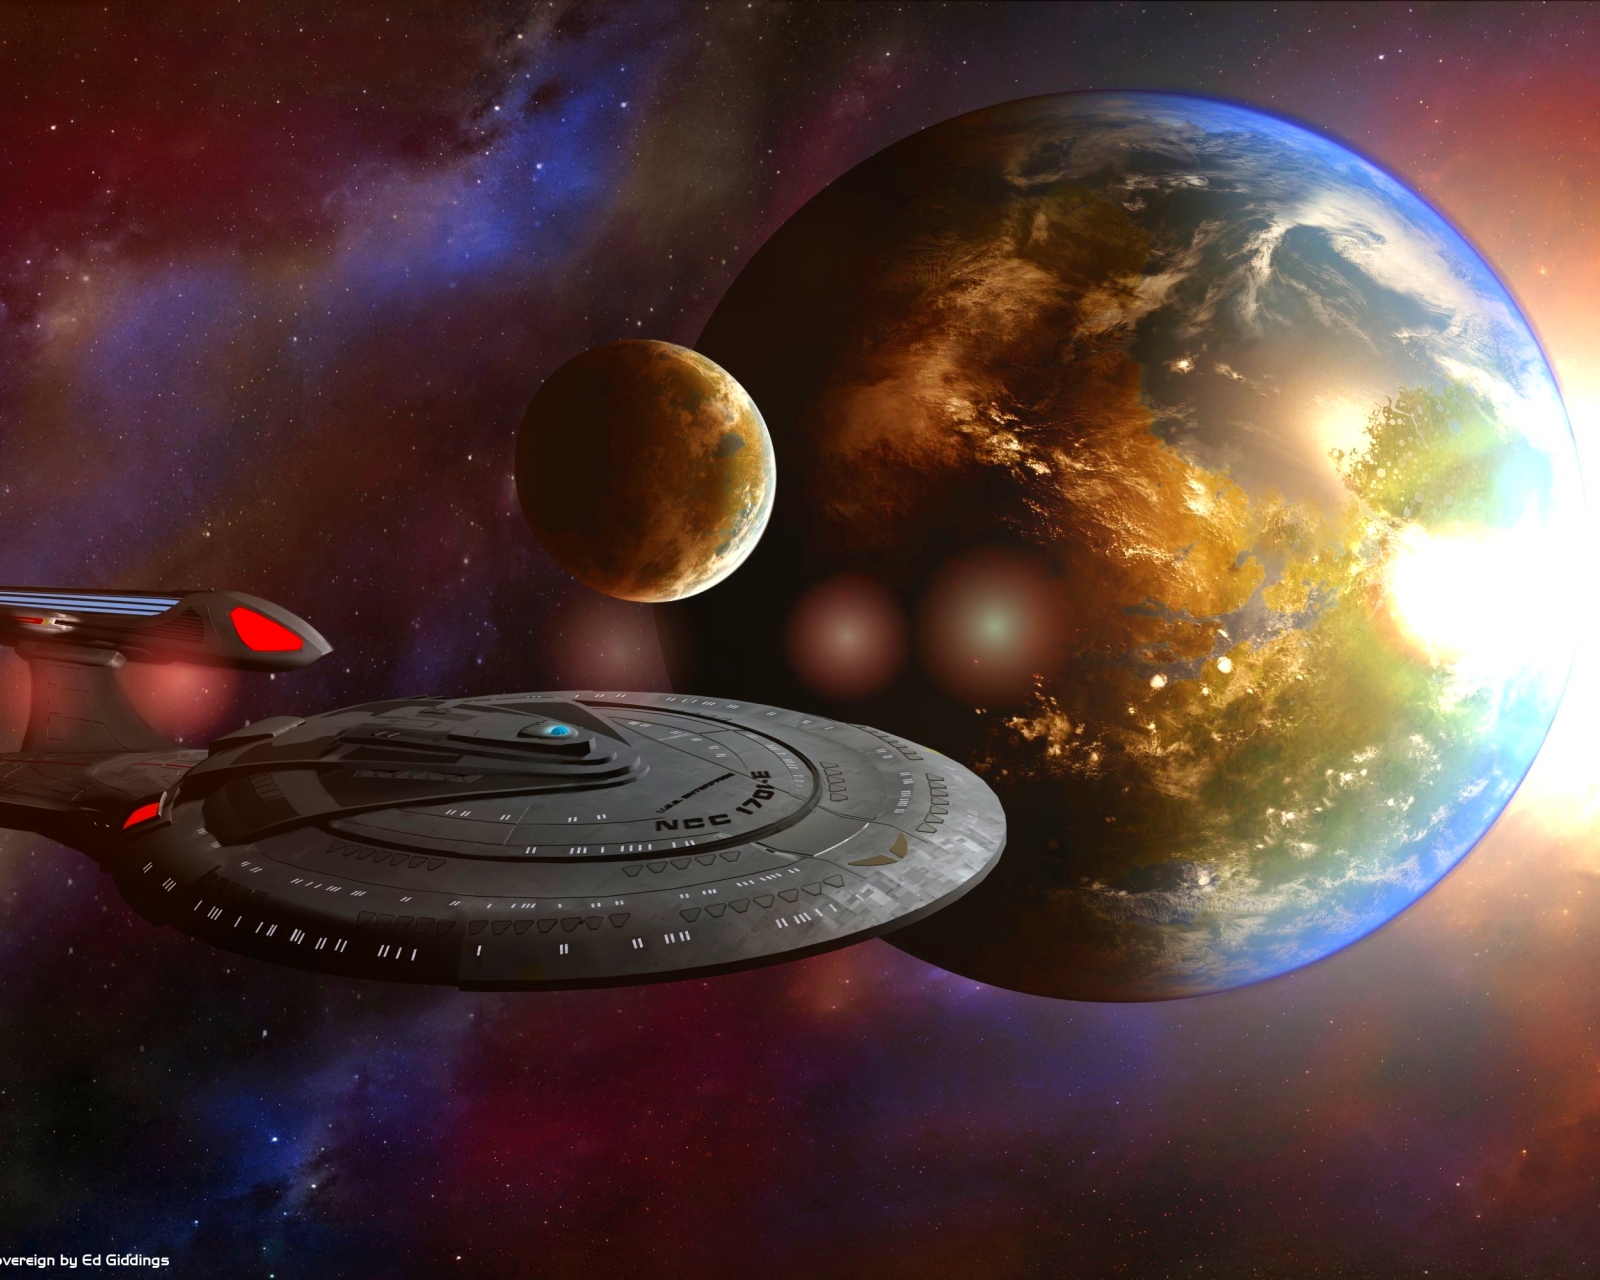 sci fi, star trek, enterprise (star trek), space